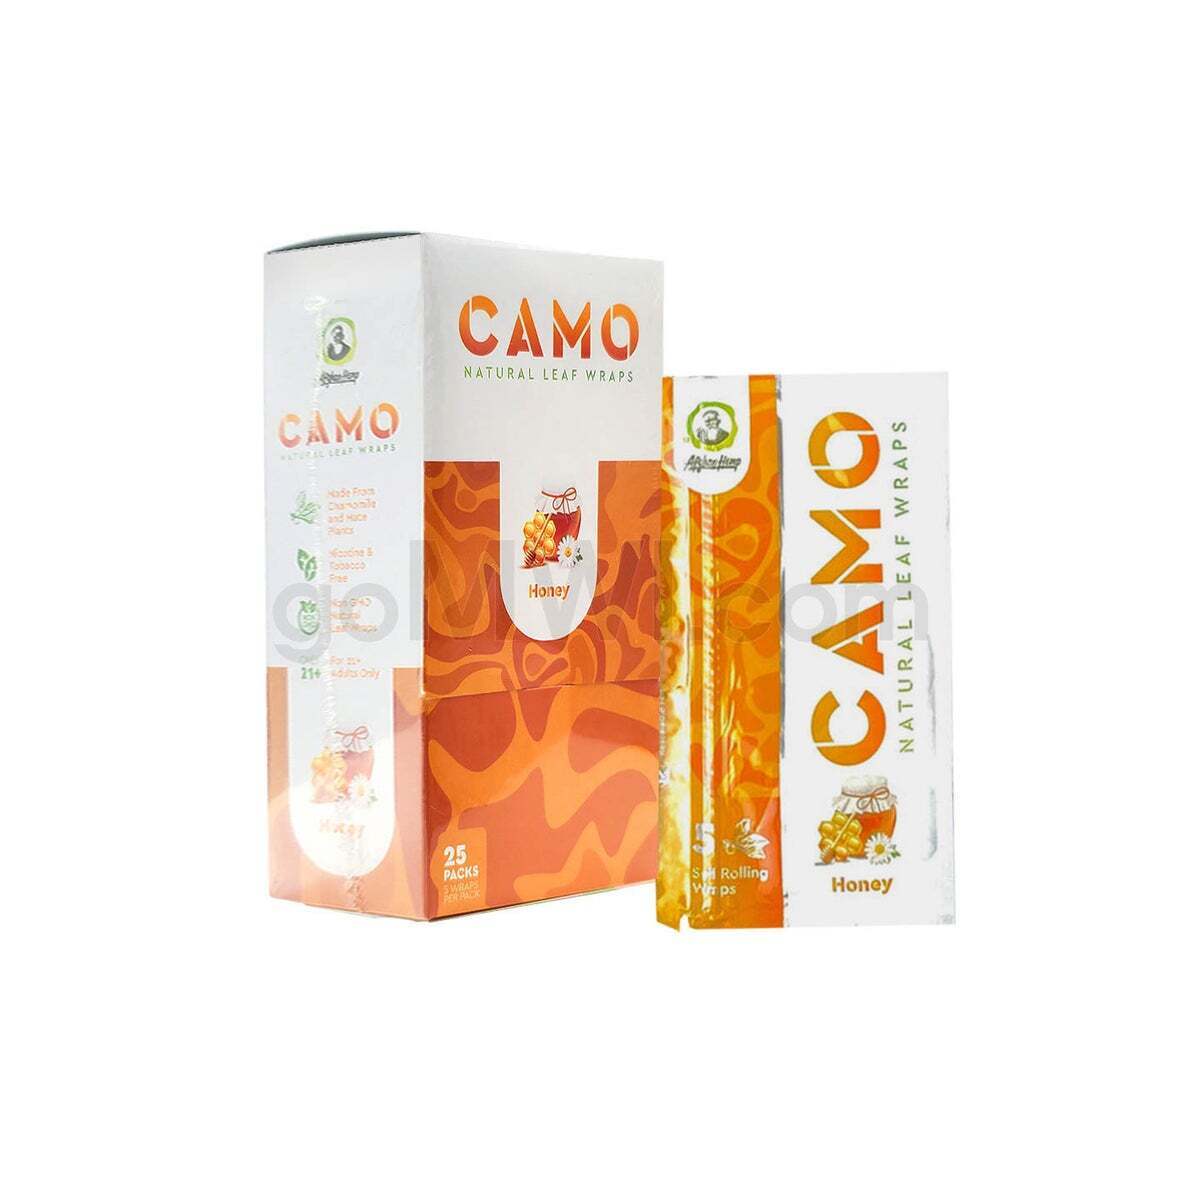 CAMO Self Rolling Wrap 125 wraps -  Honey Full box- FAST SHIPPING